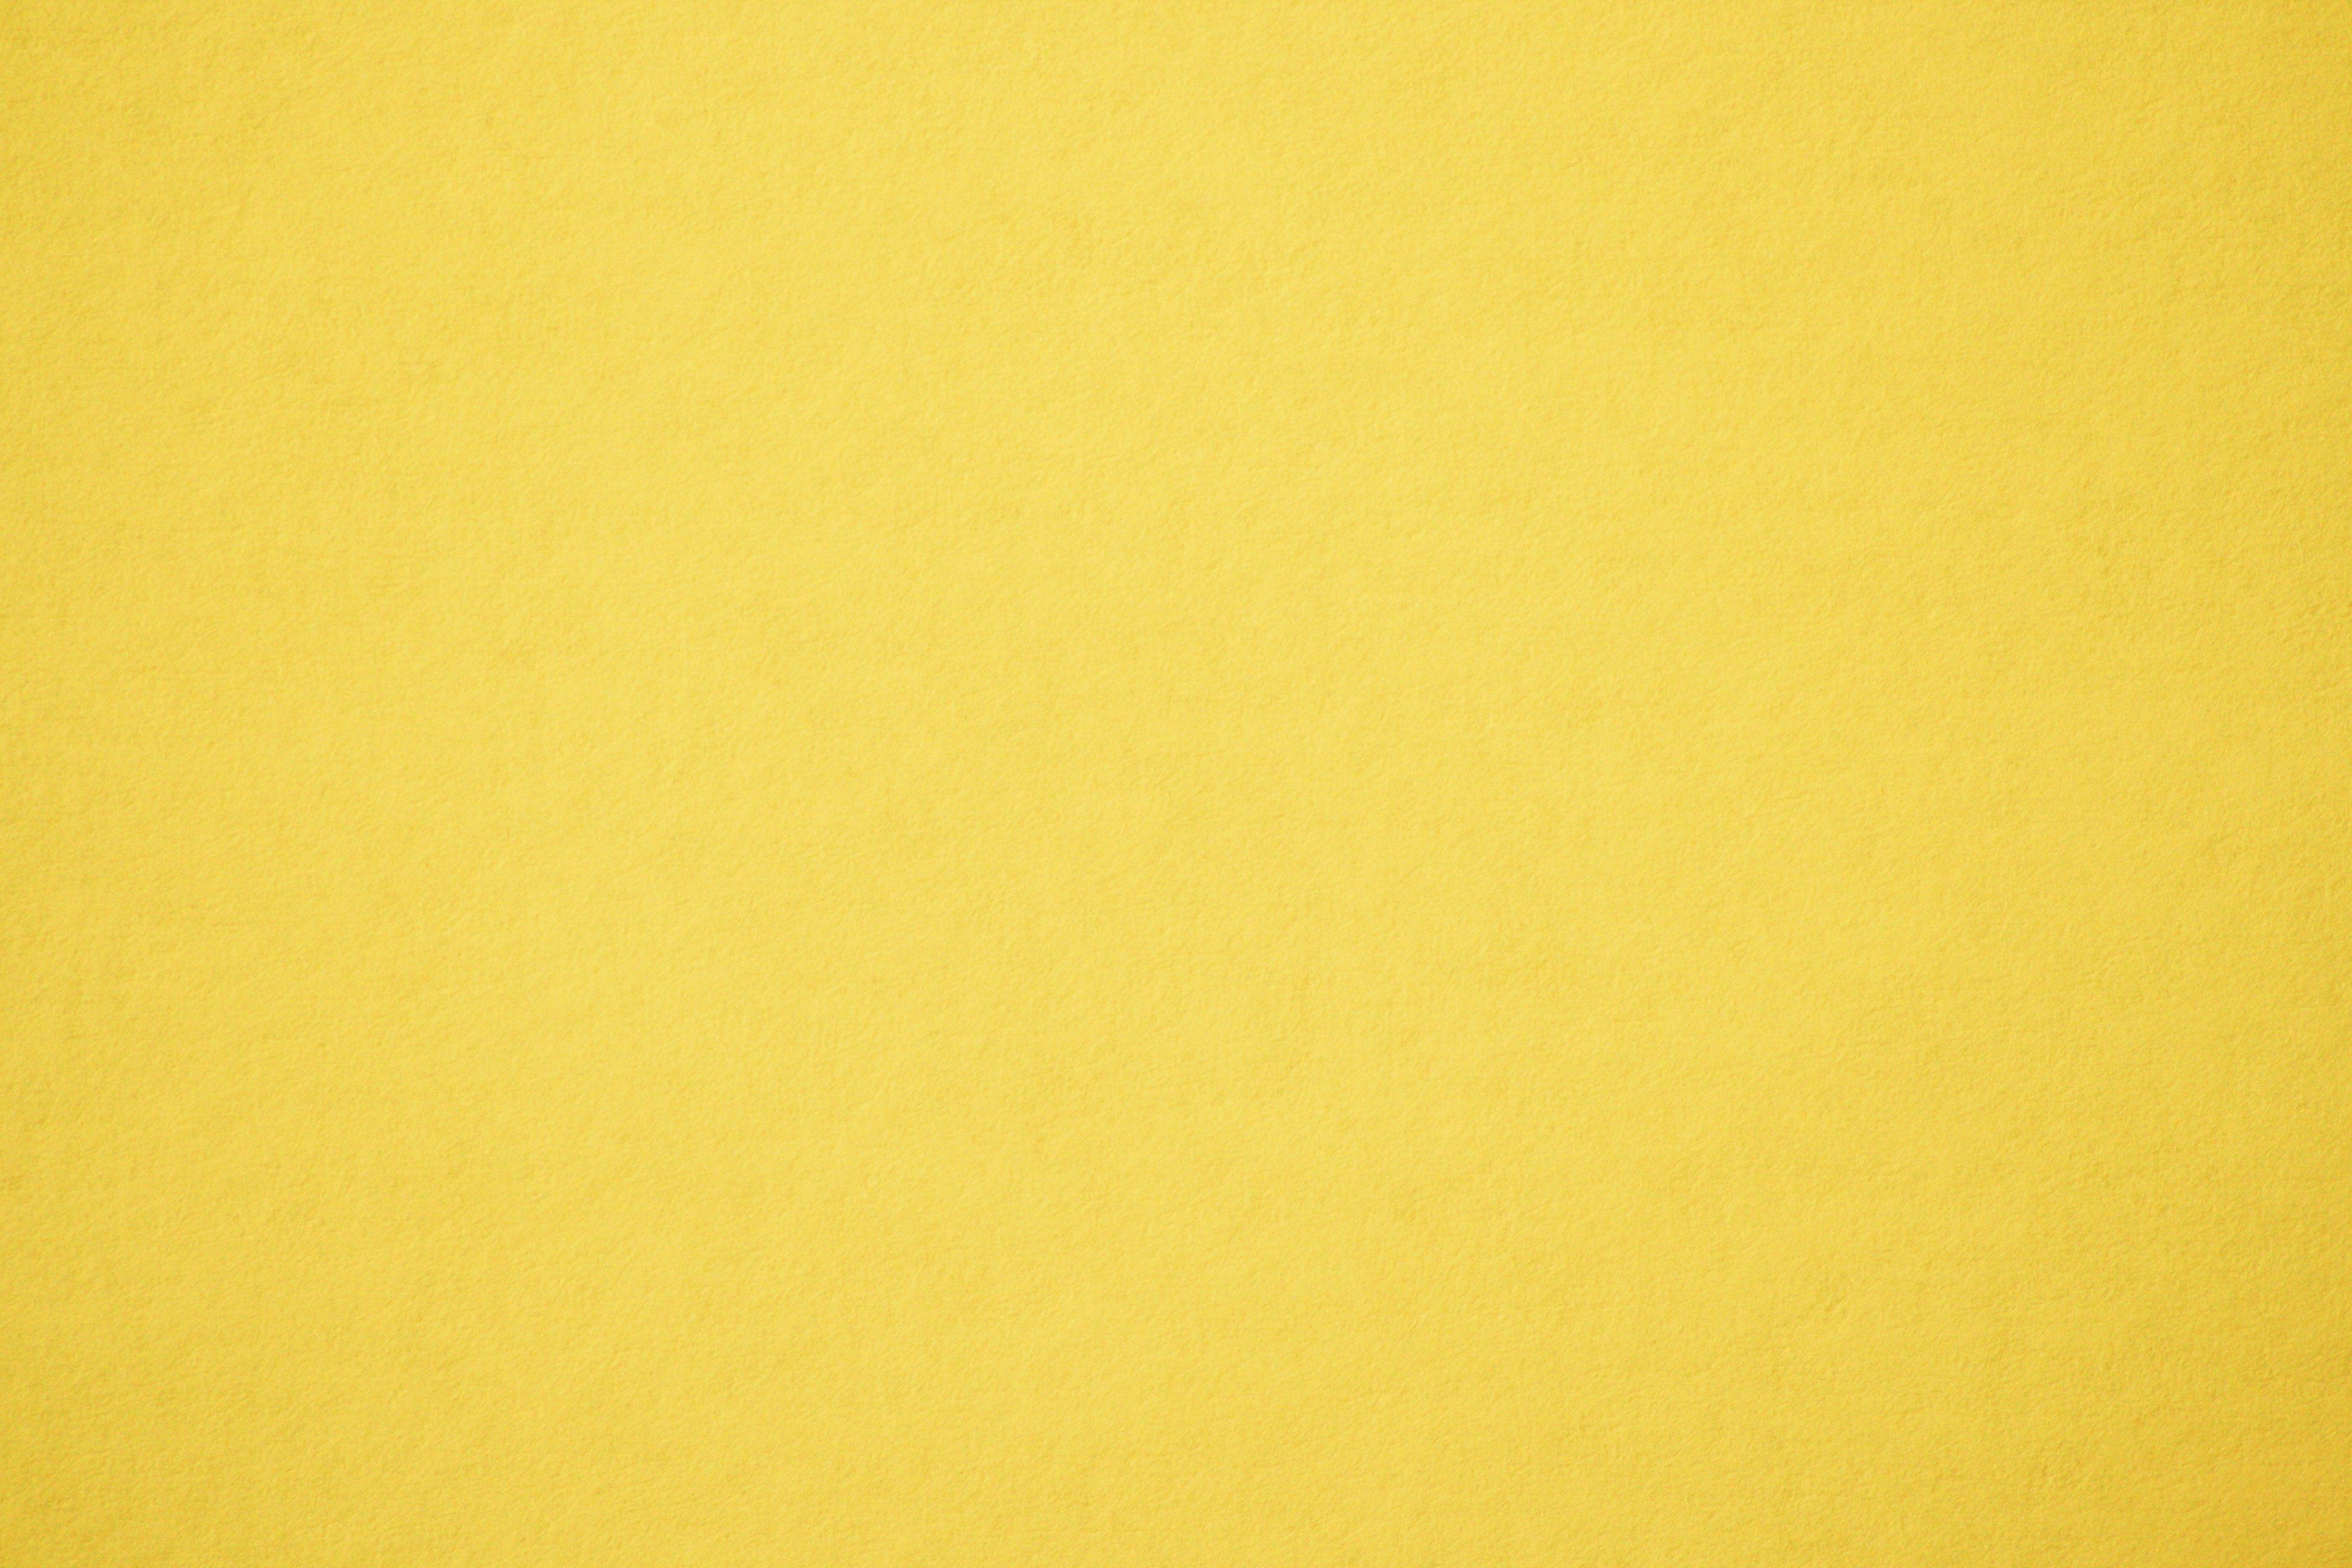 Saffron Yellow Paper Texture Picture. Free Photograph. Photo